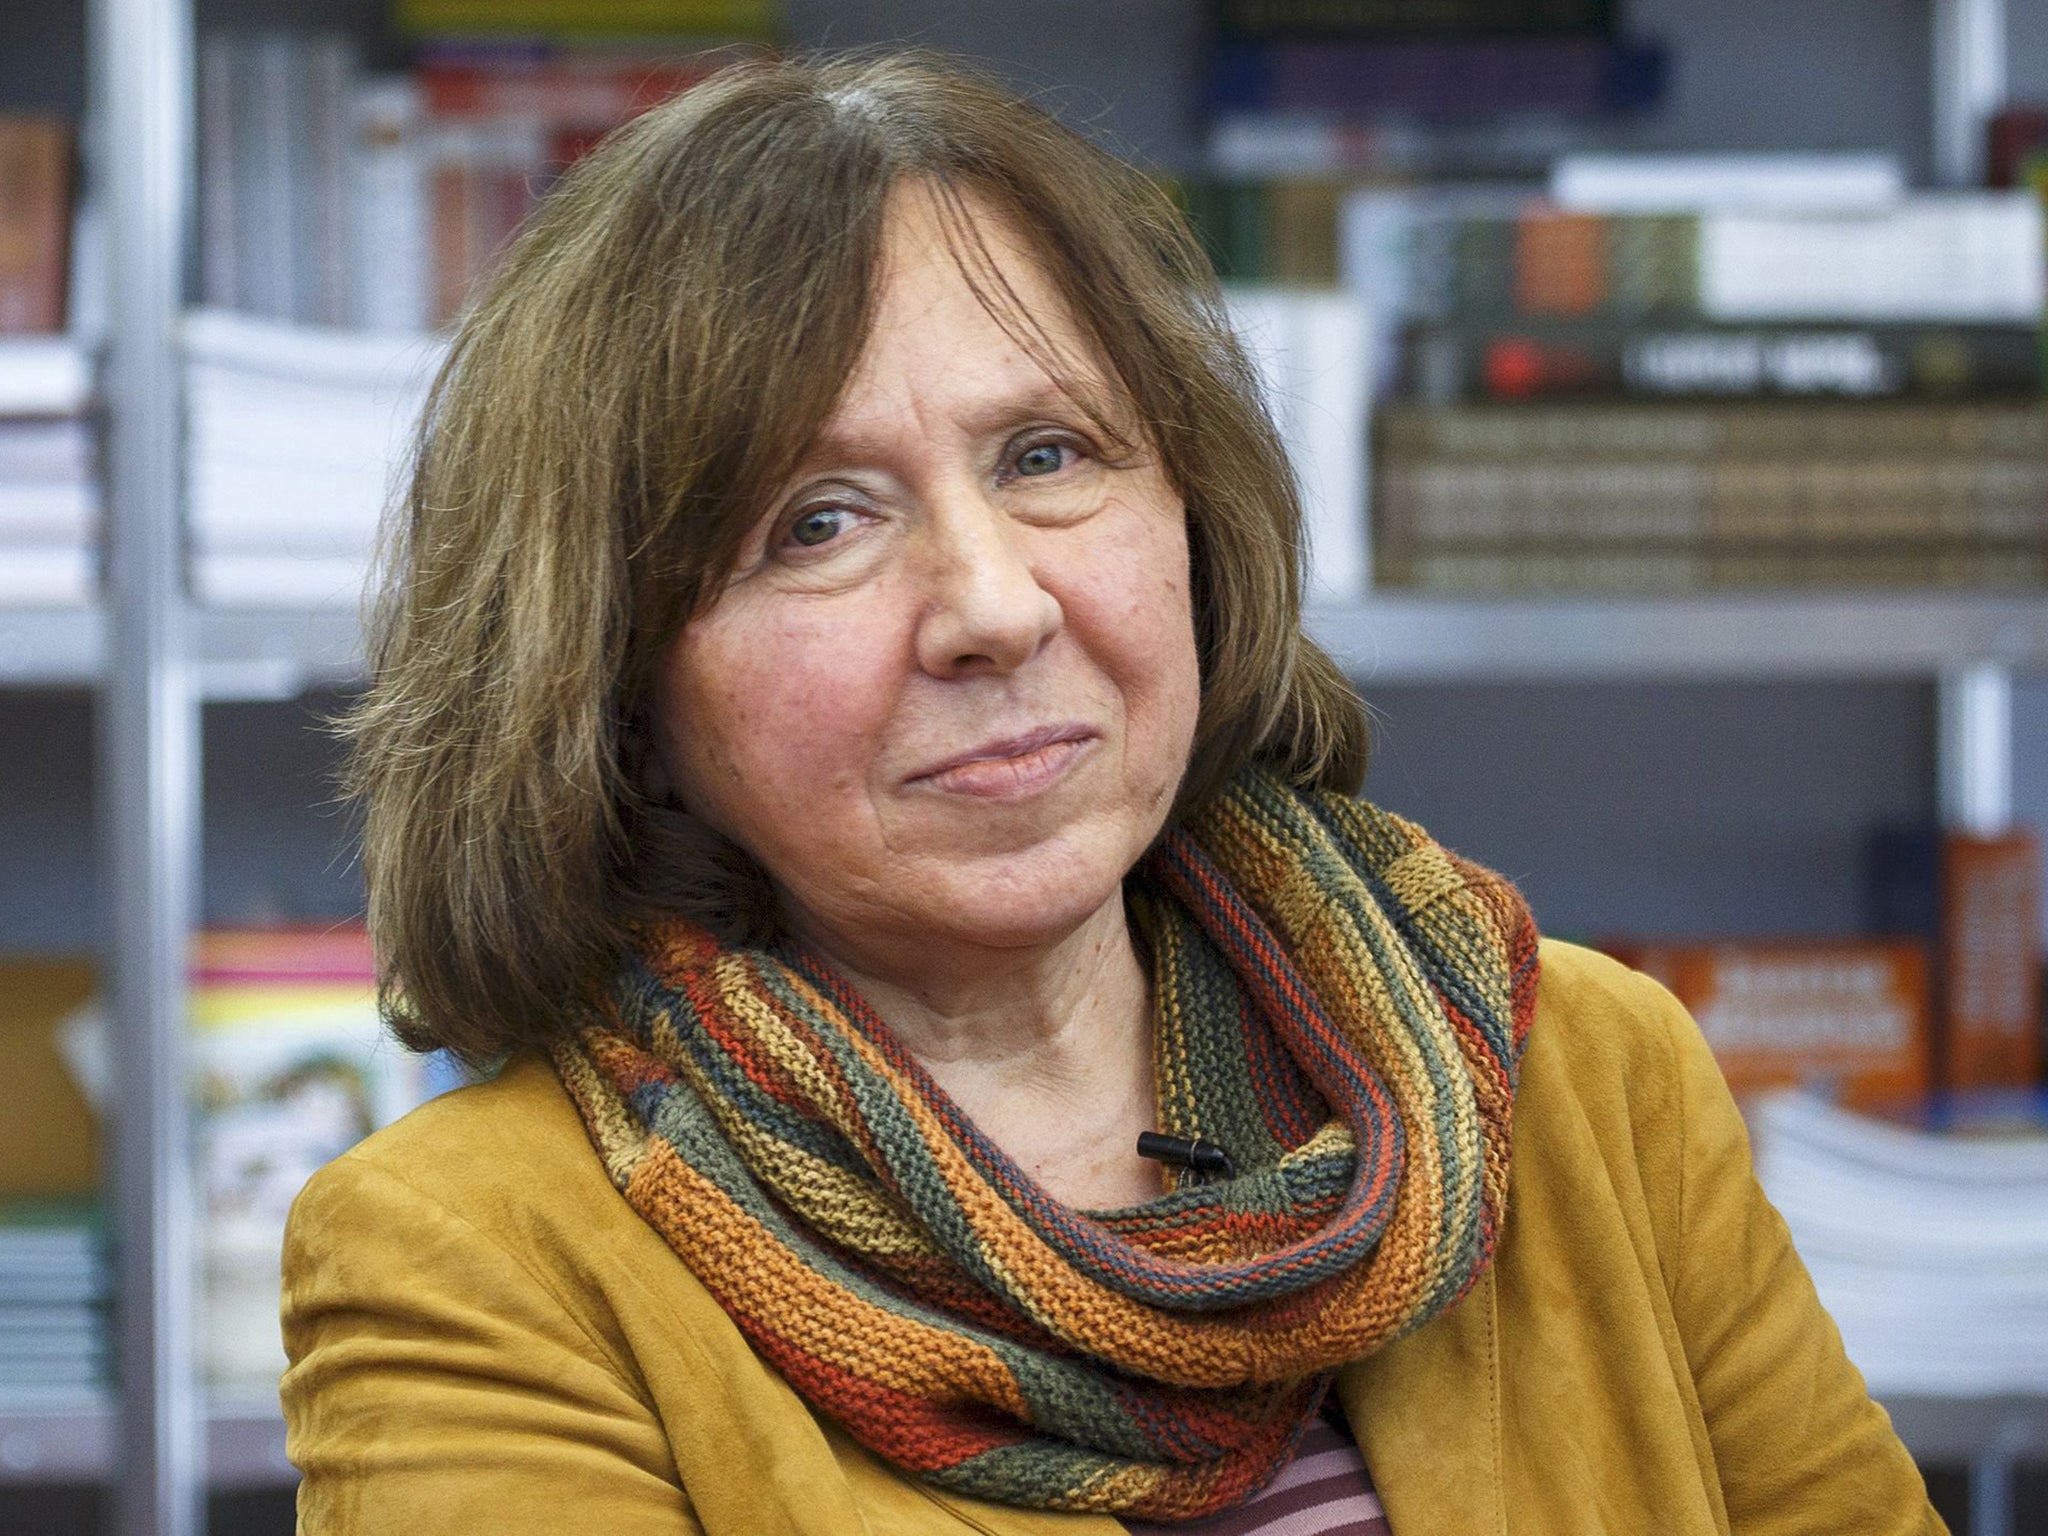 Belarusian writer Svetlana Alexievich won the 2015 Nobel Prize for Literature